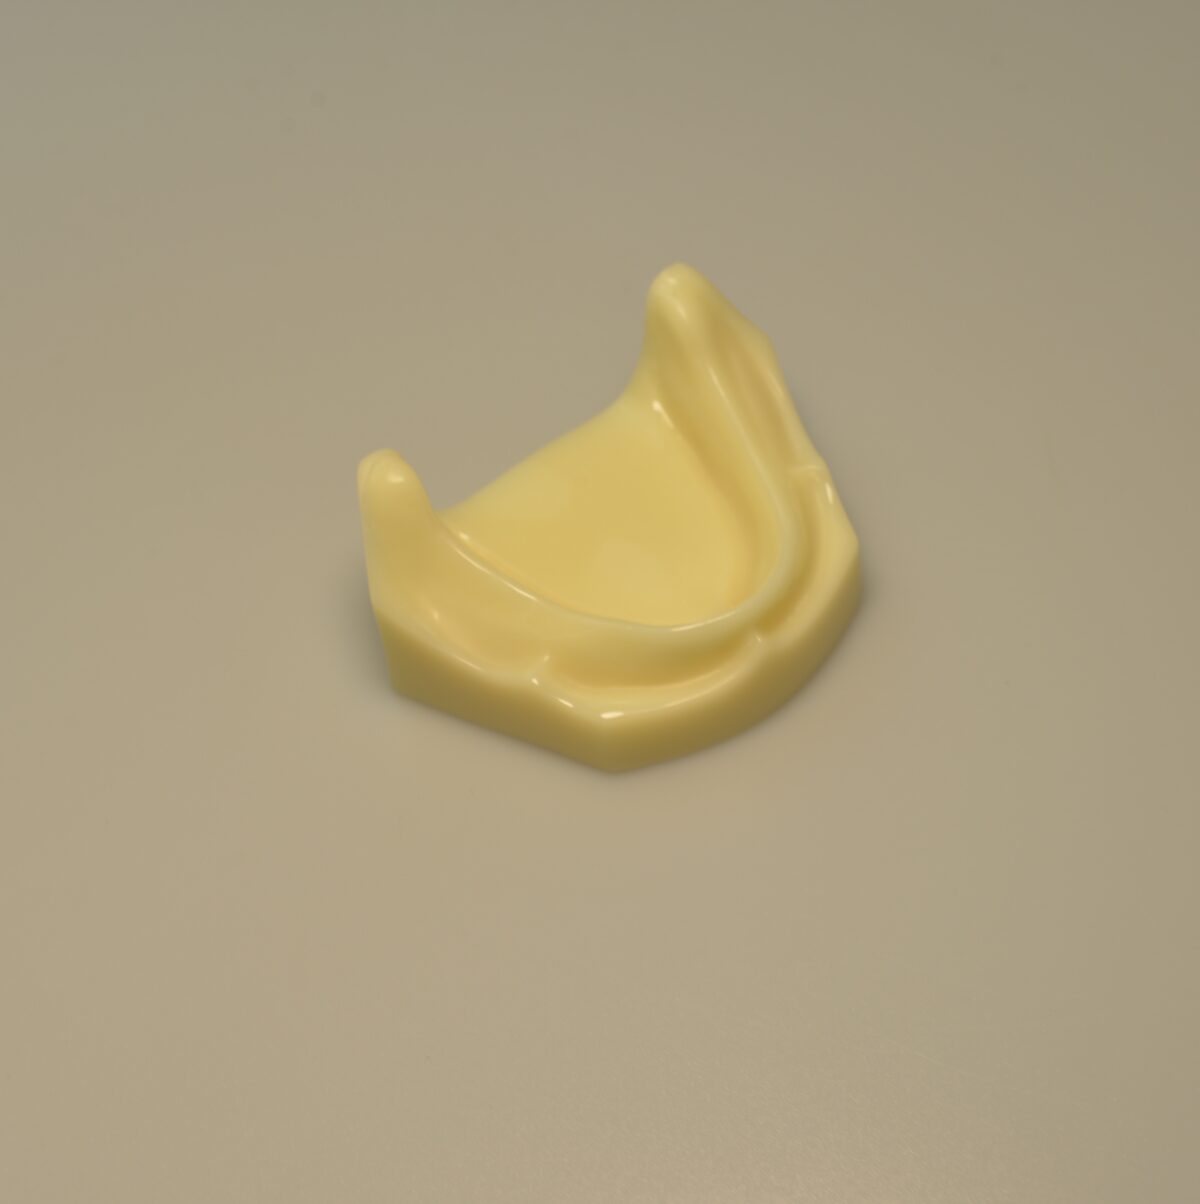 mandibular implant drilling practice model